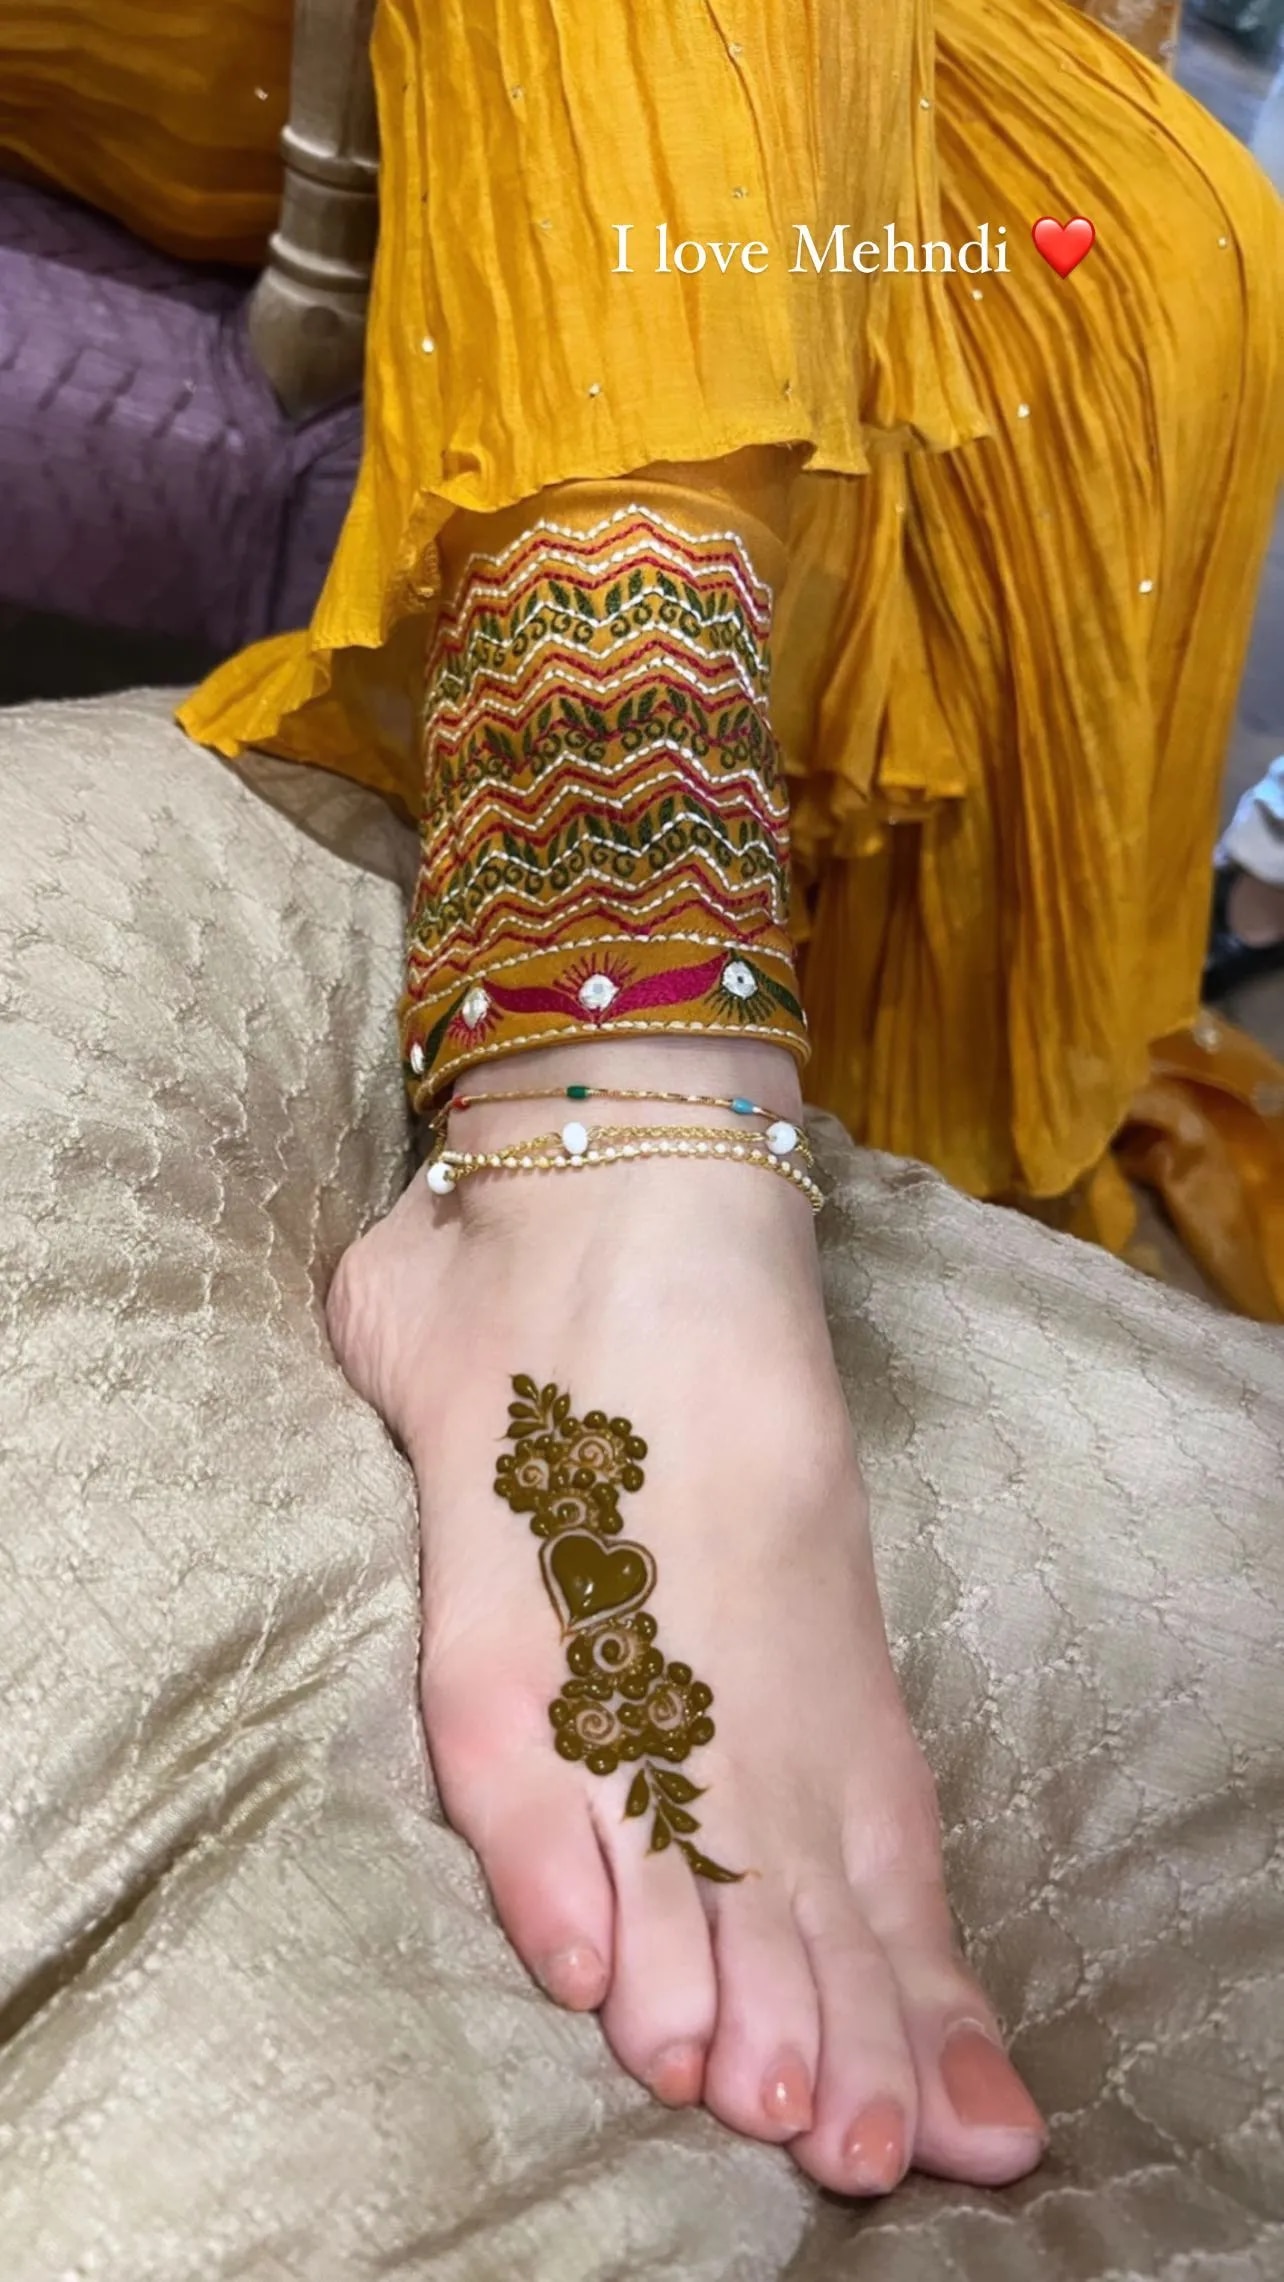 Ranbir Kapoor-Alia Bhatt Wedding: Inside PICS From The Mehendi Ceremony